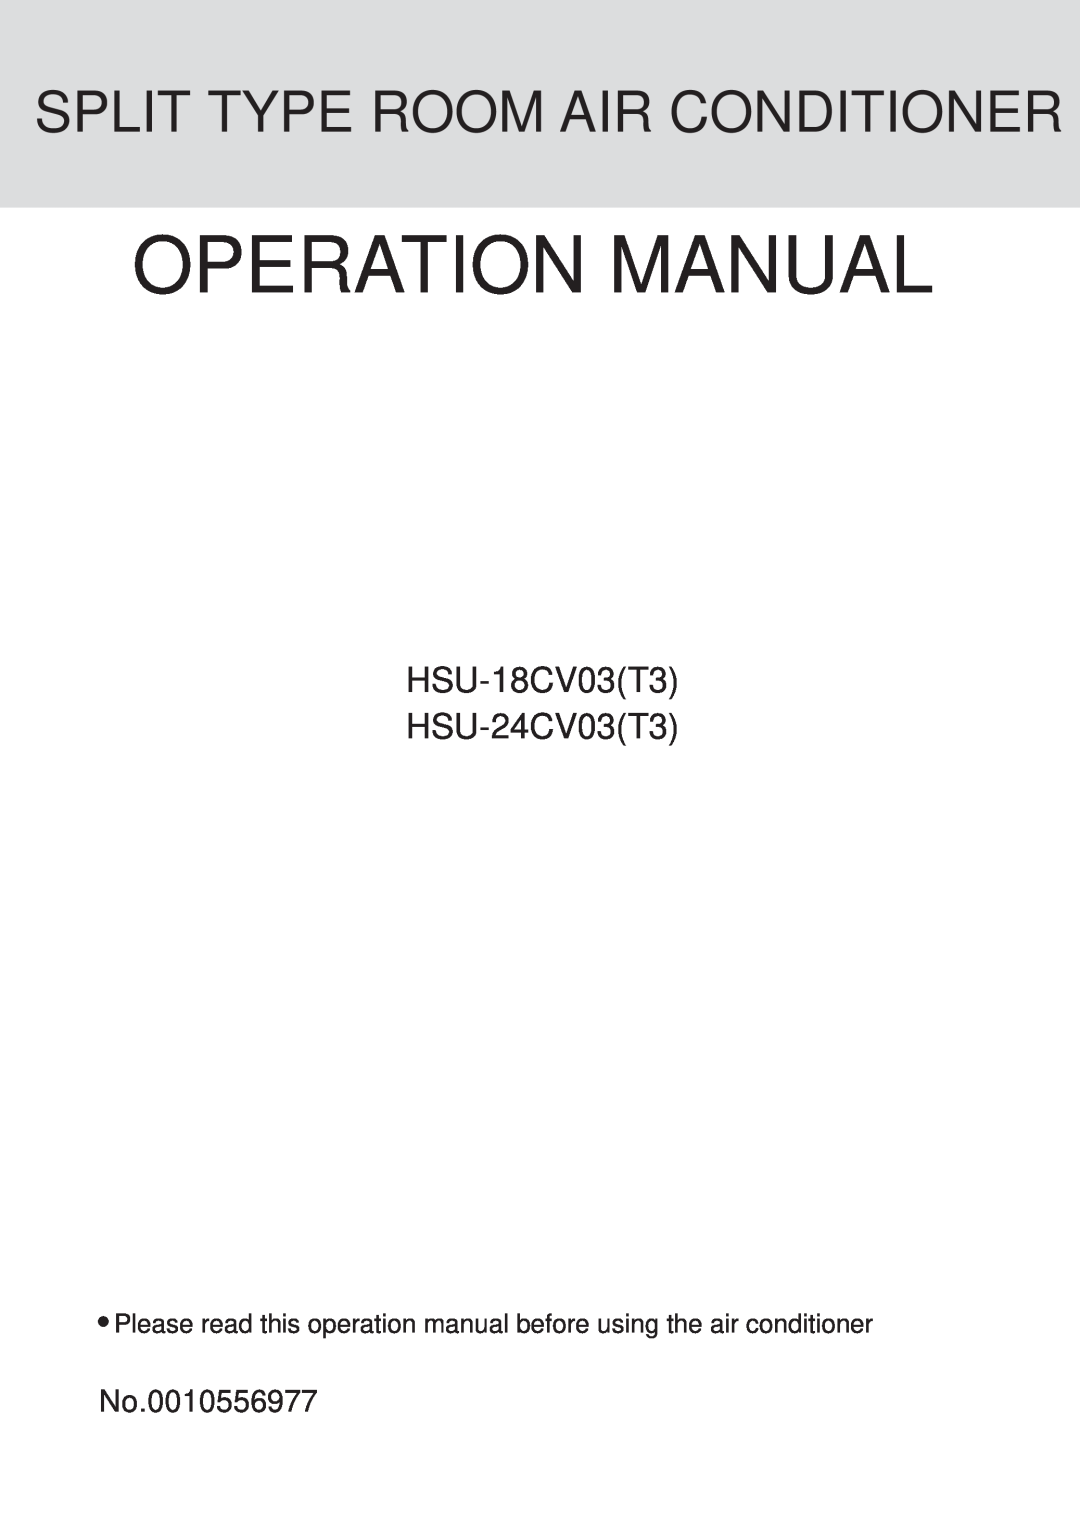 Haier HSU-24CV03(T3) operation manual HSU-18CV03T3 HSU-24CV03T3, No.0010556977, Split Type Room Air Conditioner 